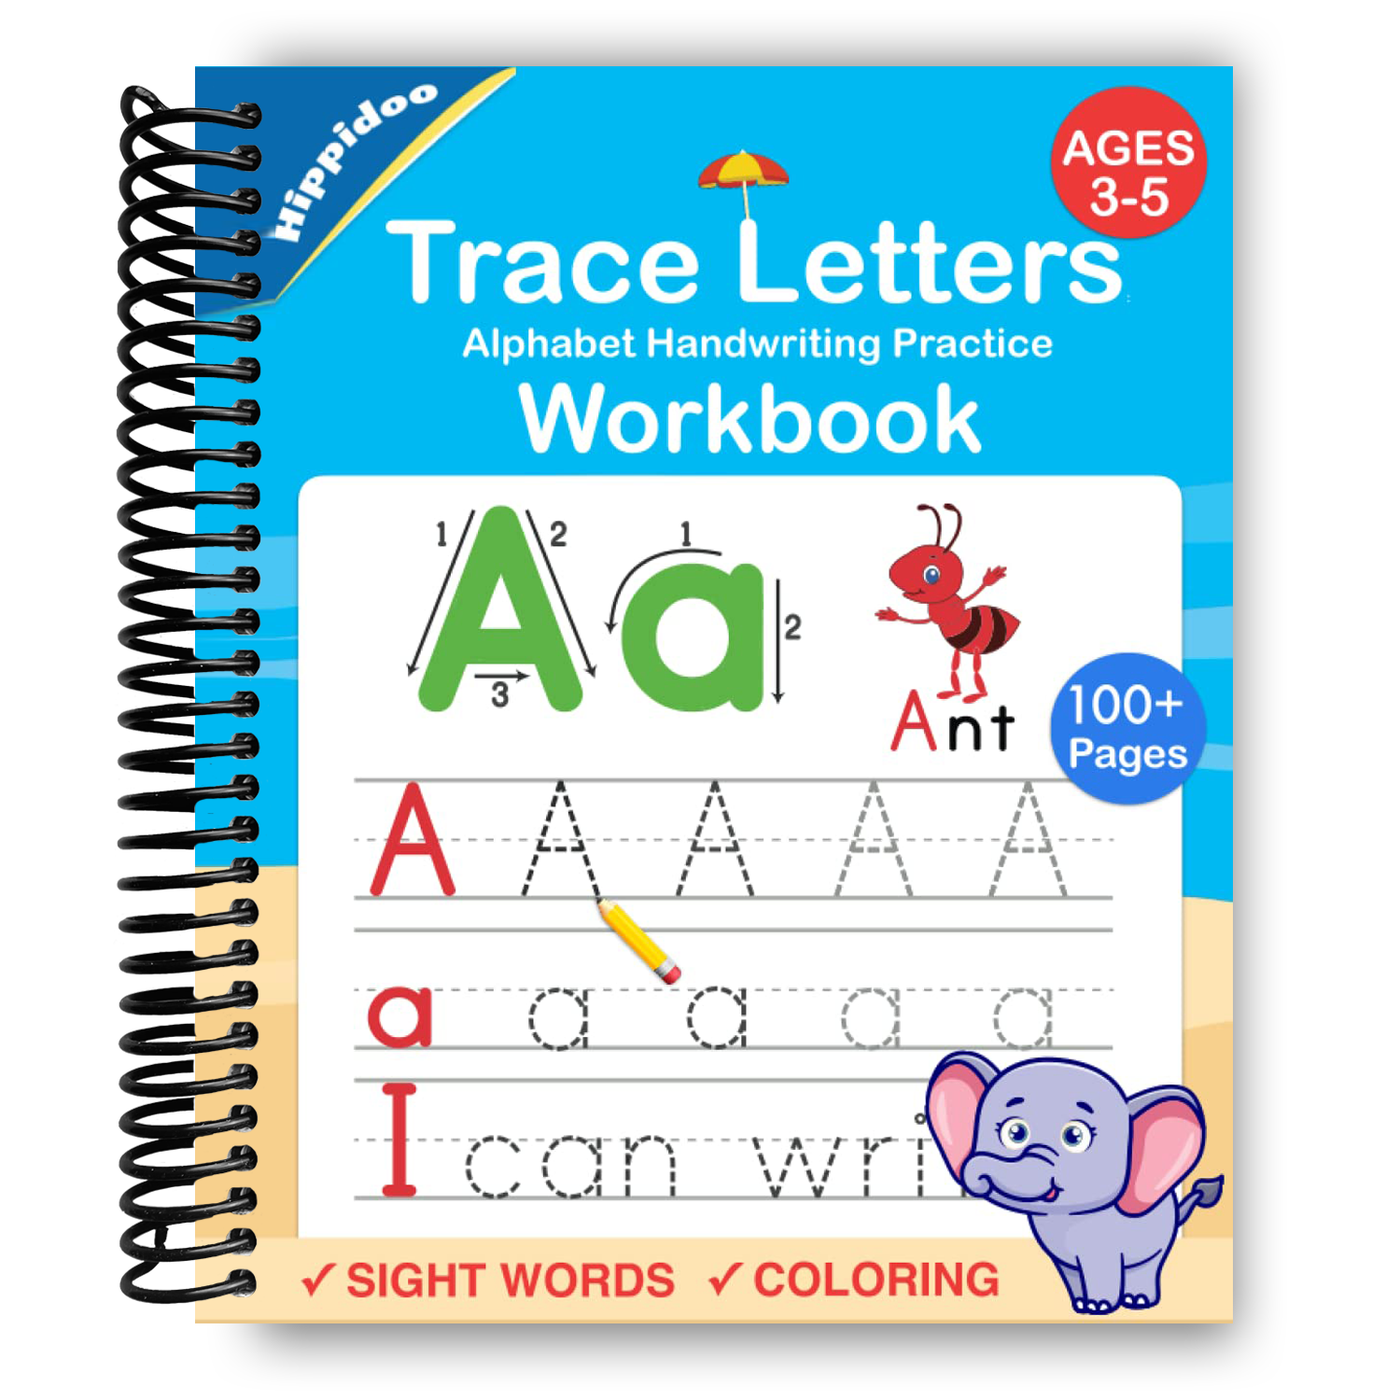 Trace Letters: Alphabet Handwriting Practice Workbook for Kids (Spiral Bound)